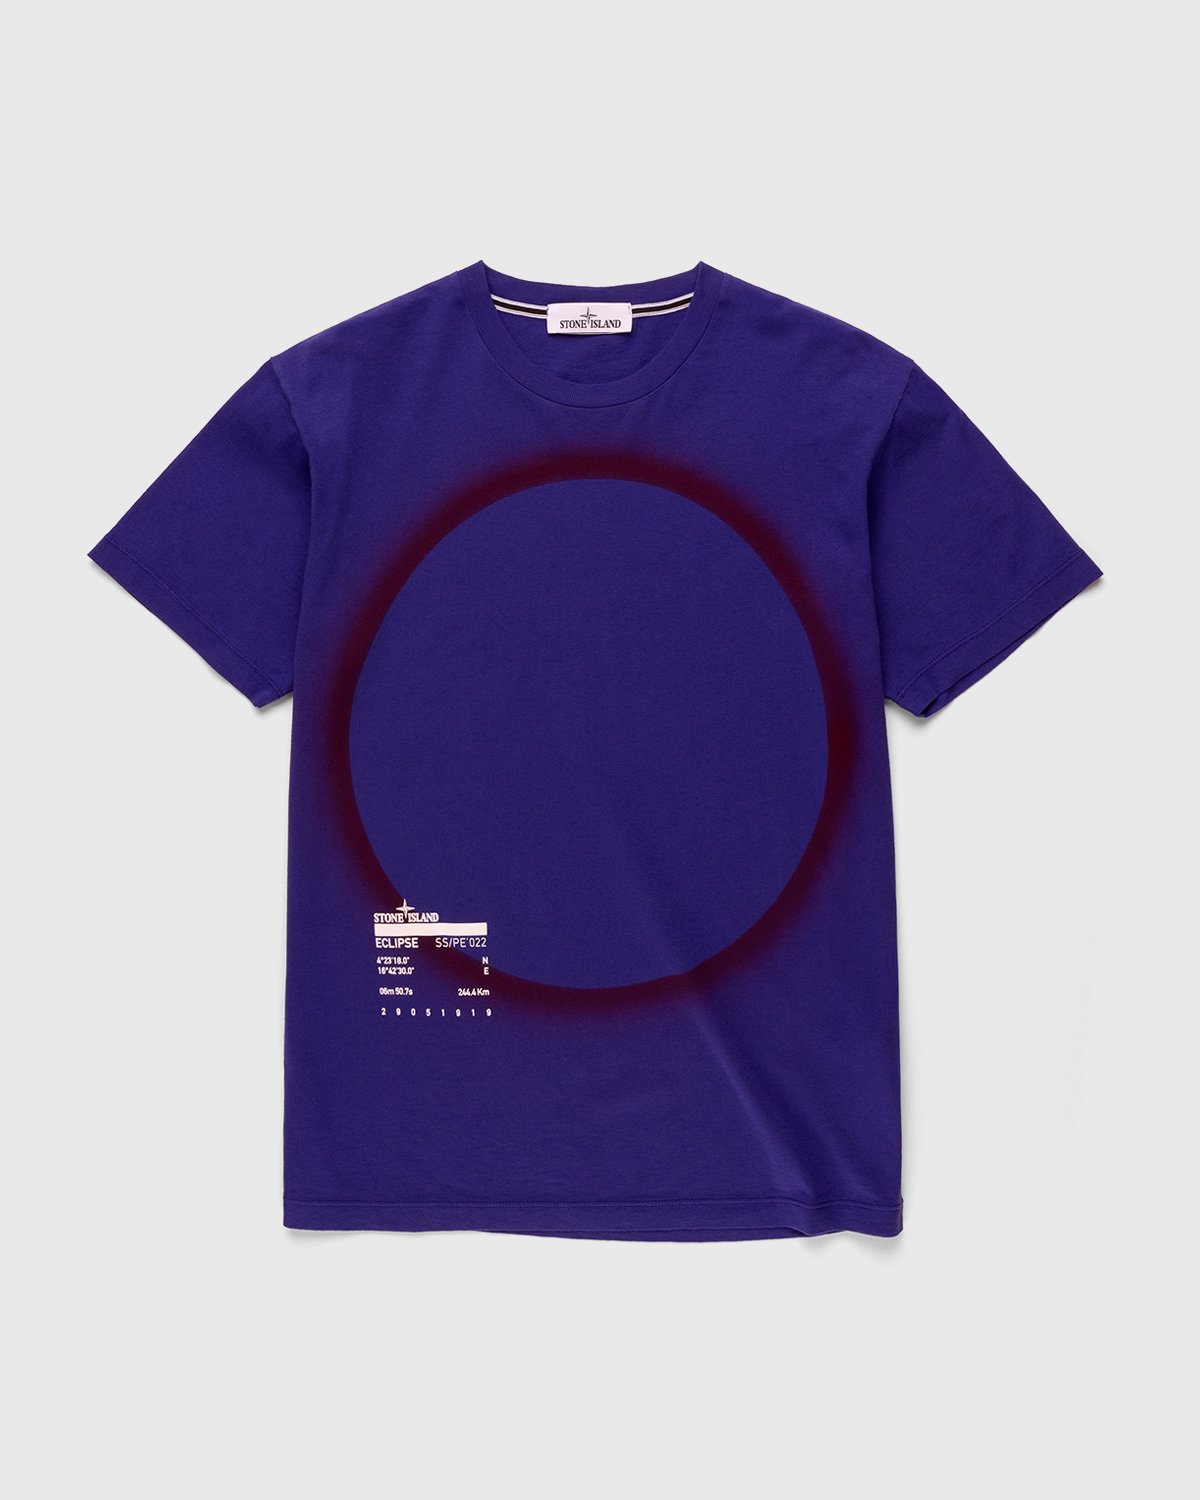 Stone Island - 2NS95 Garment-Dyed Solar Eclipse One T-Shirt Bright Blue - Clothing - Blue - Image 1